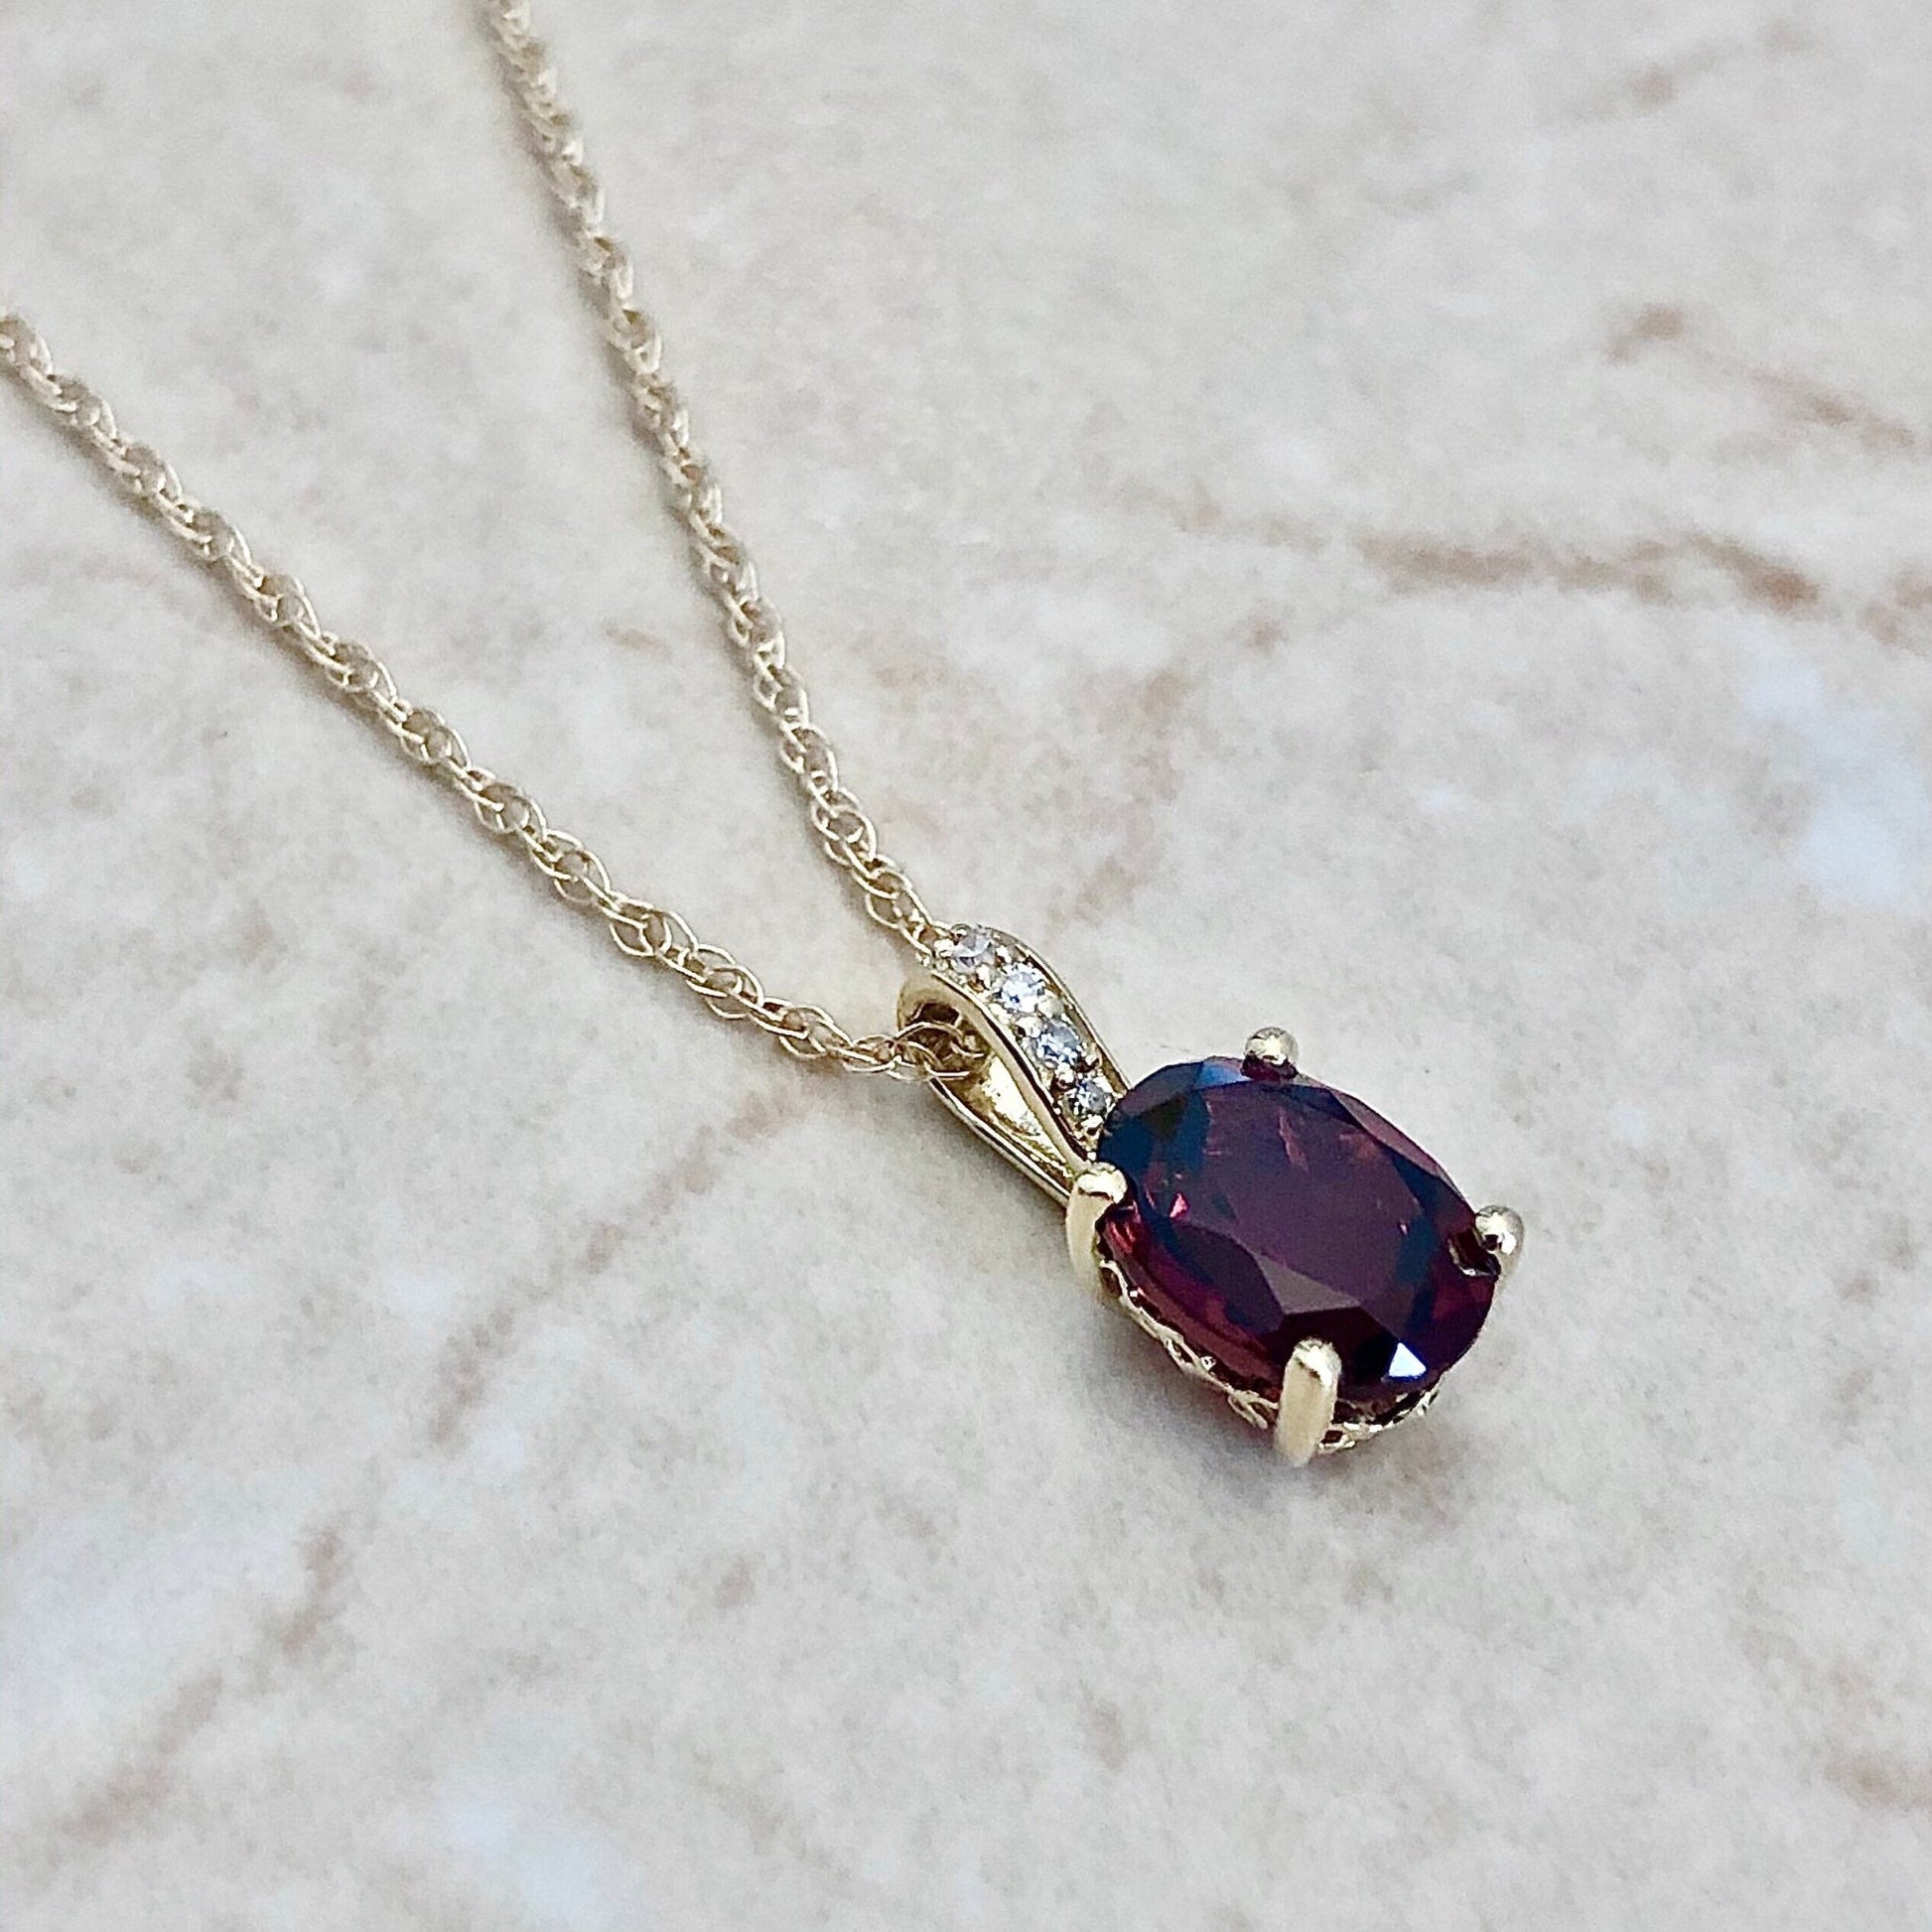 14K Garnet & Diamond Pendant Necklace - Yellow Gold - Oval Garnet January Birthstone - Genuine Gemstone - 18” Chain - Birthday Gift